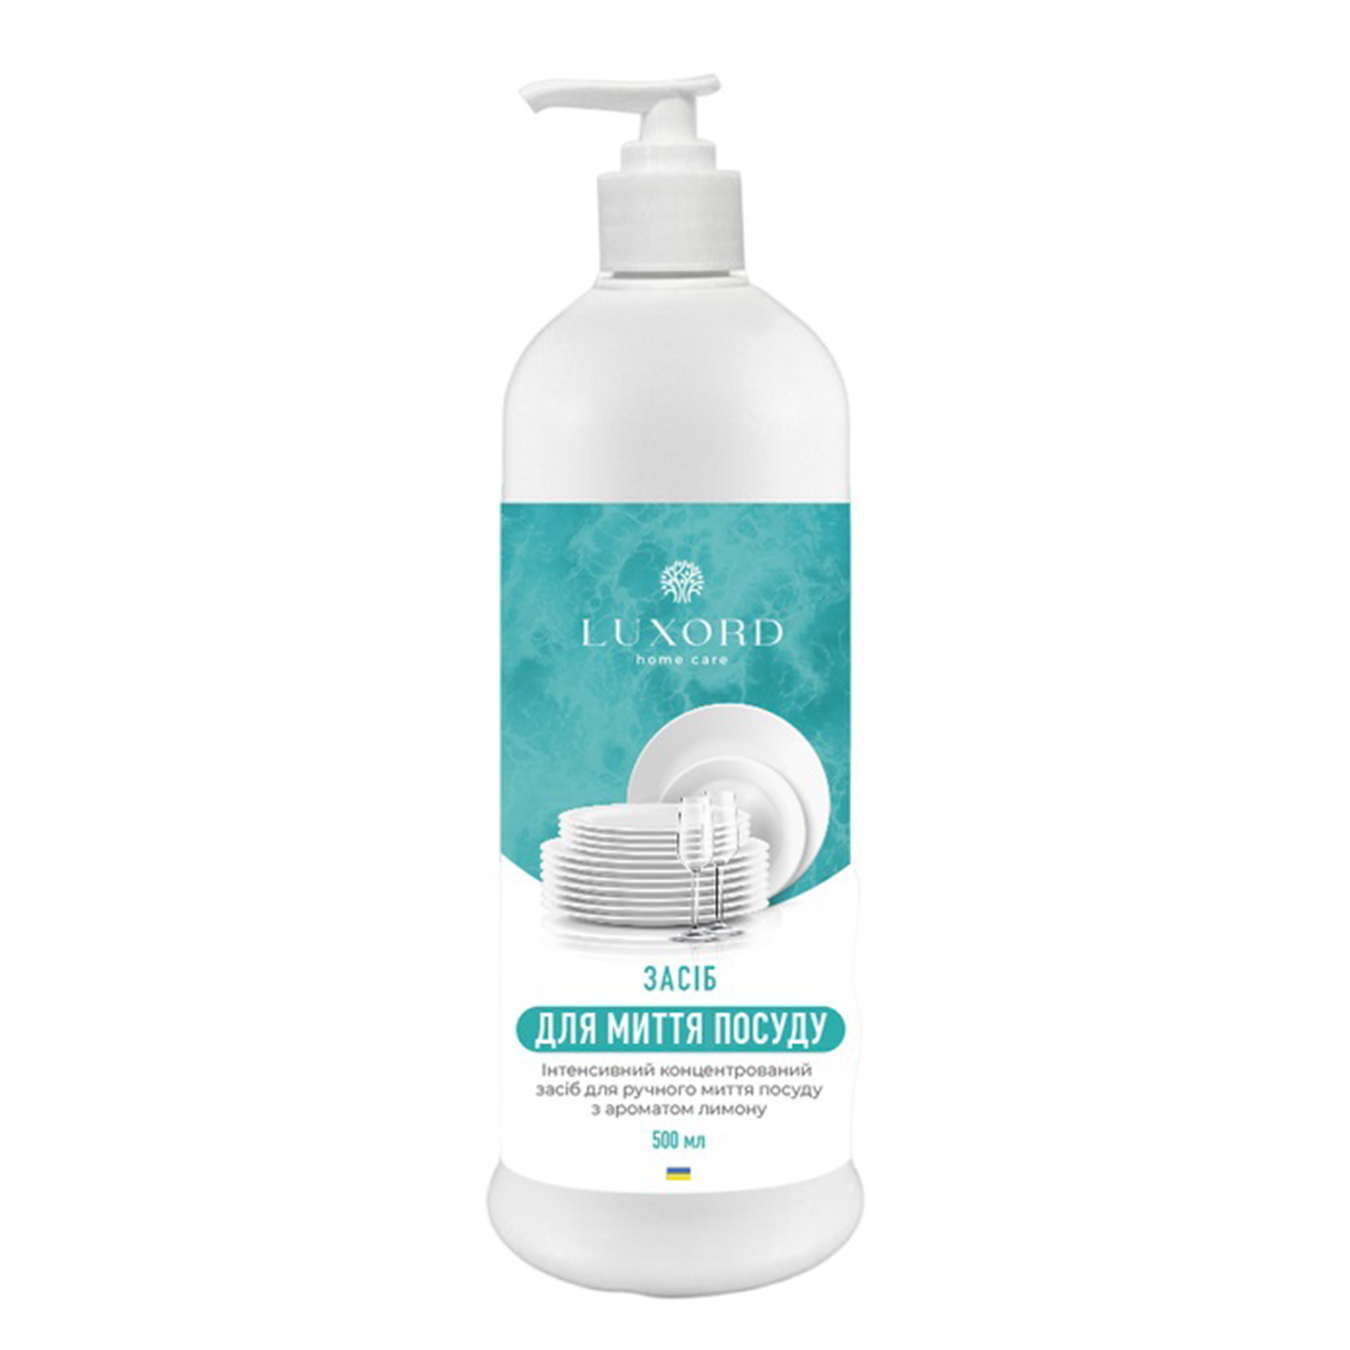 Luxord dishwashing detergent organic dispenser 500 ml